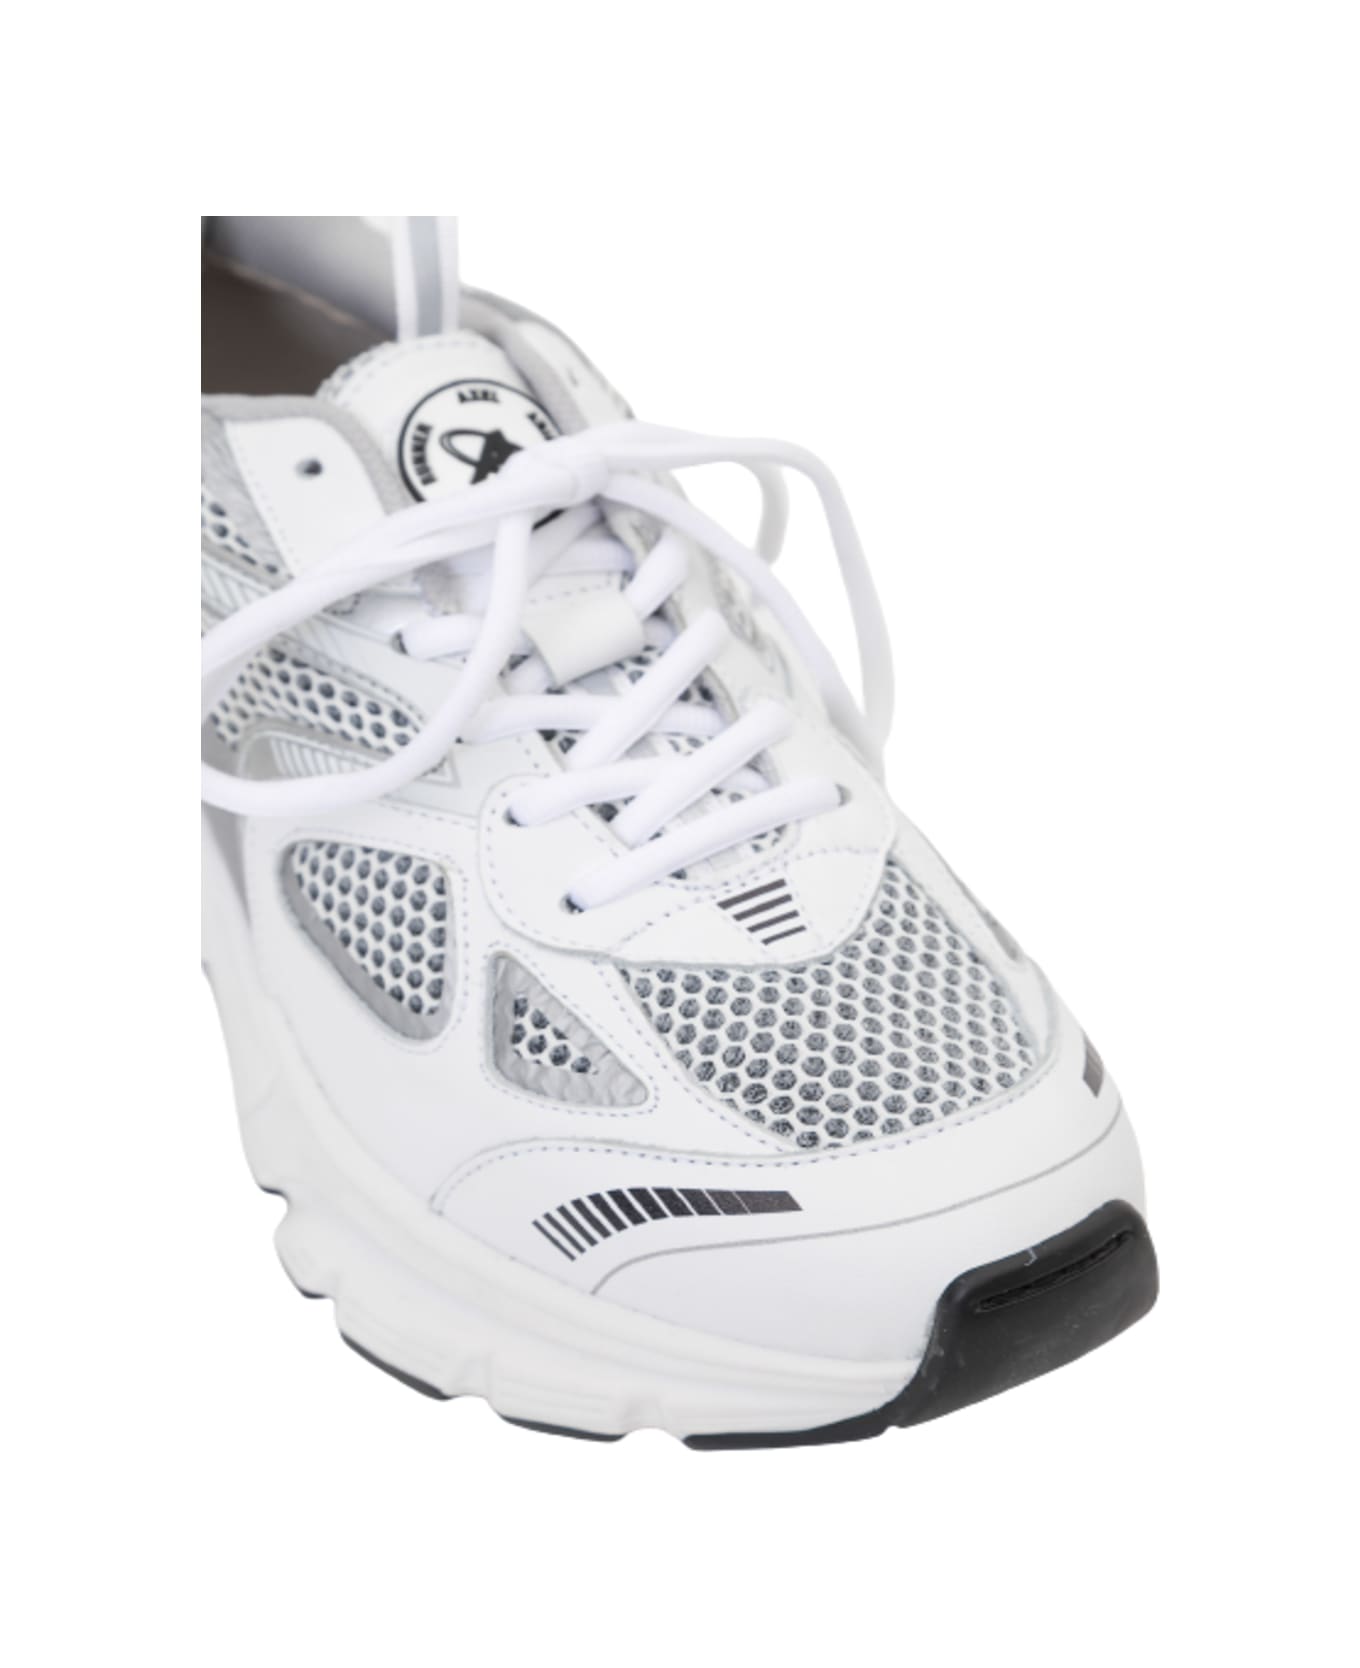 Axel Arigato 'marathon Runner' Silver And White Sneakers Wth Logo In Leather Blend Man Axel Arigato - White